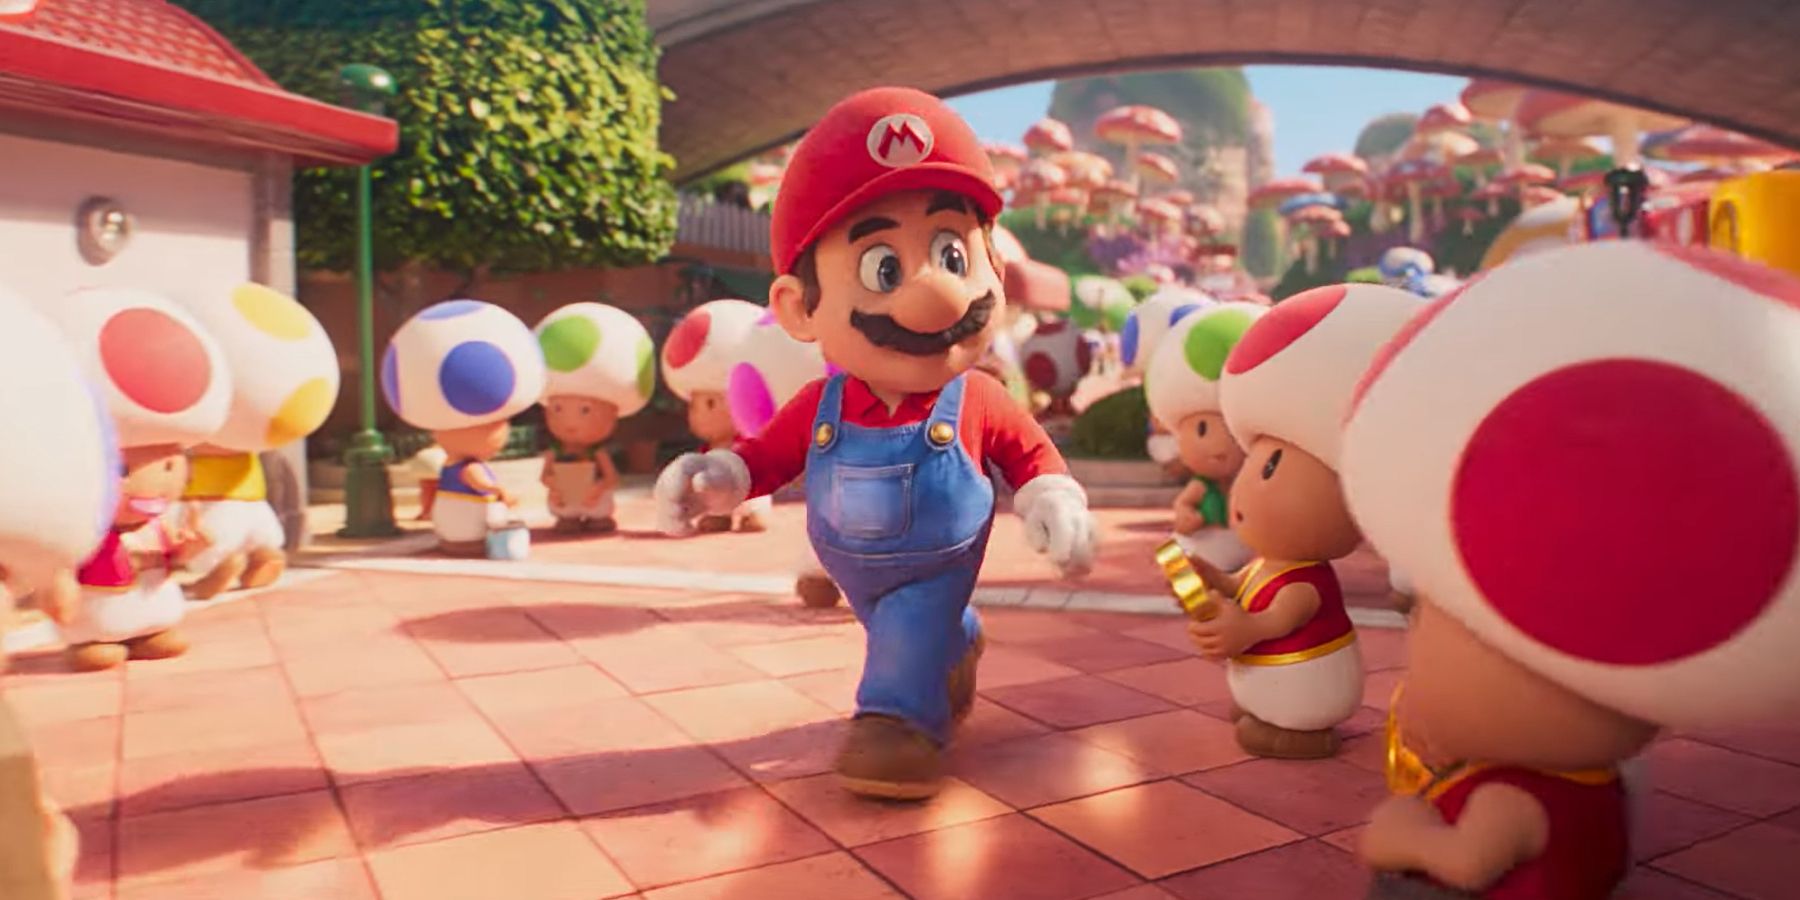 Mario traversant le Royaume Champignon dans le film Super Mario Bros.